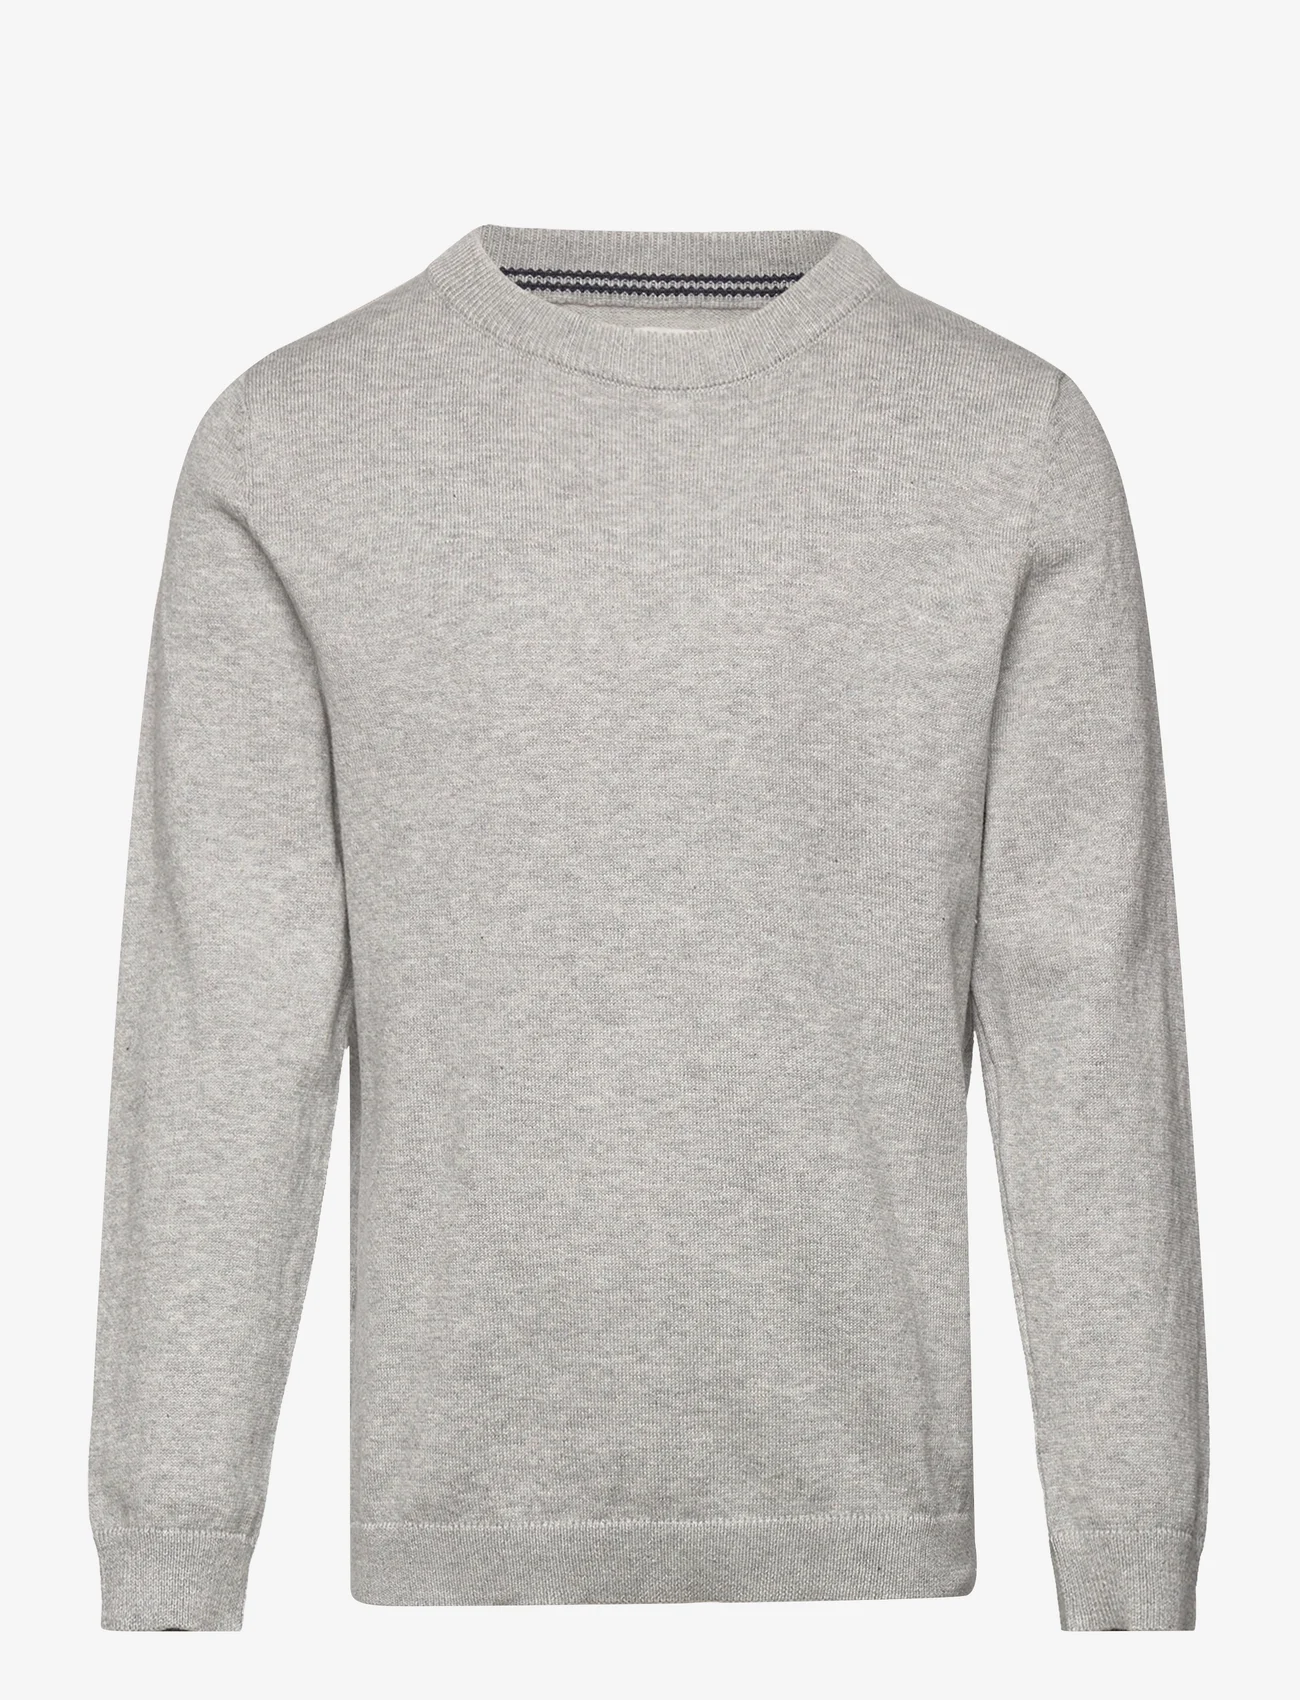 Mango - Knit cotton sweater - tröjor - medium grey - 0